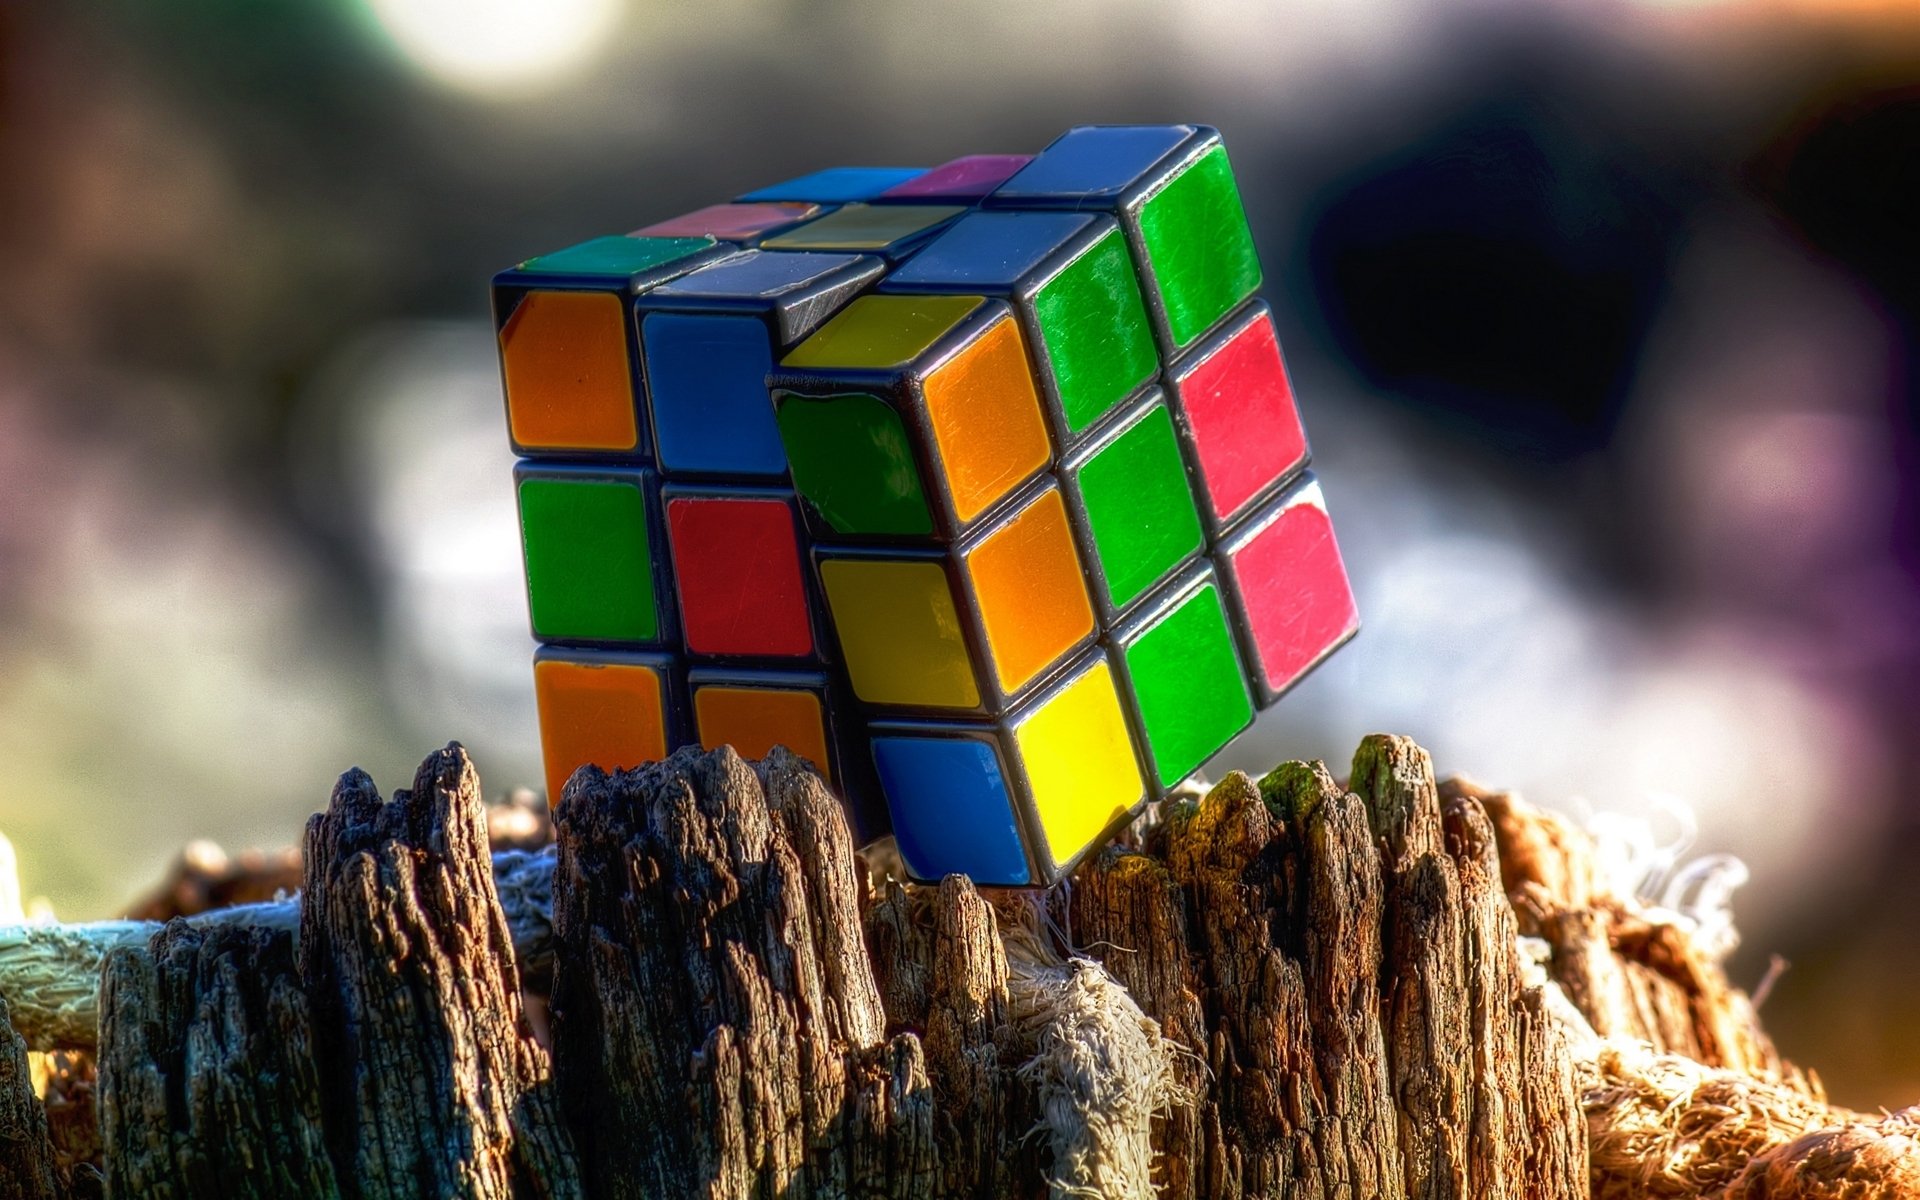 rubik's wallpaper,rubik's cube,toy,mechanical puzzle,puzzle,colorfulness